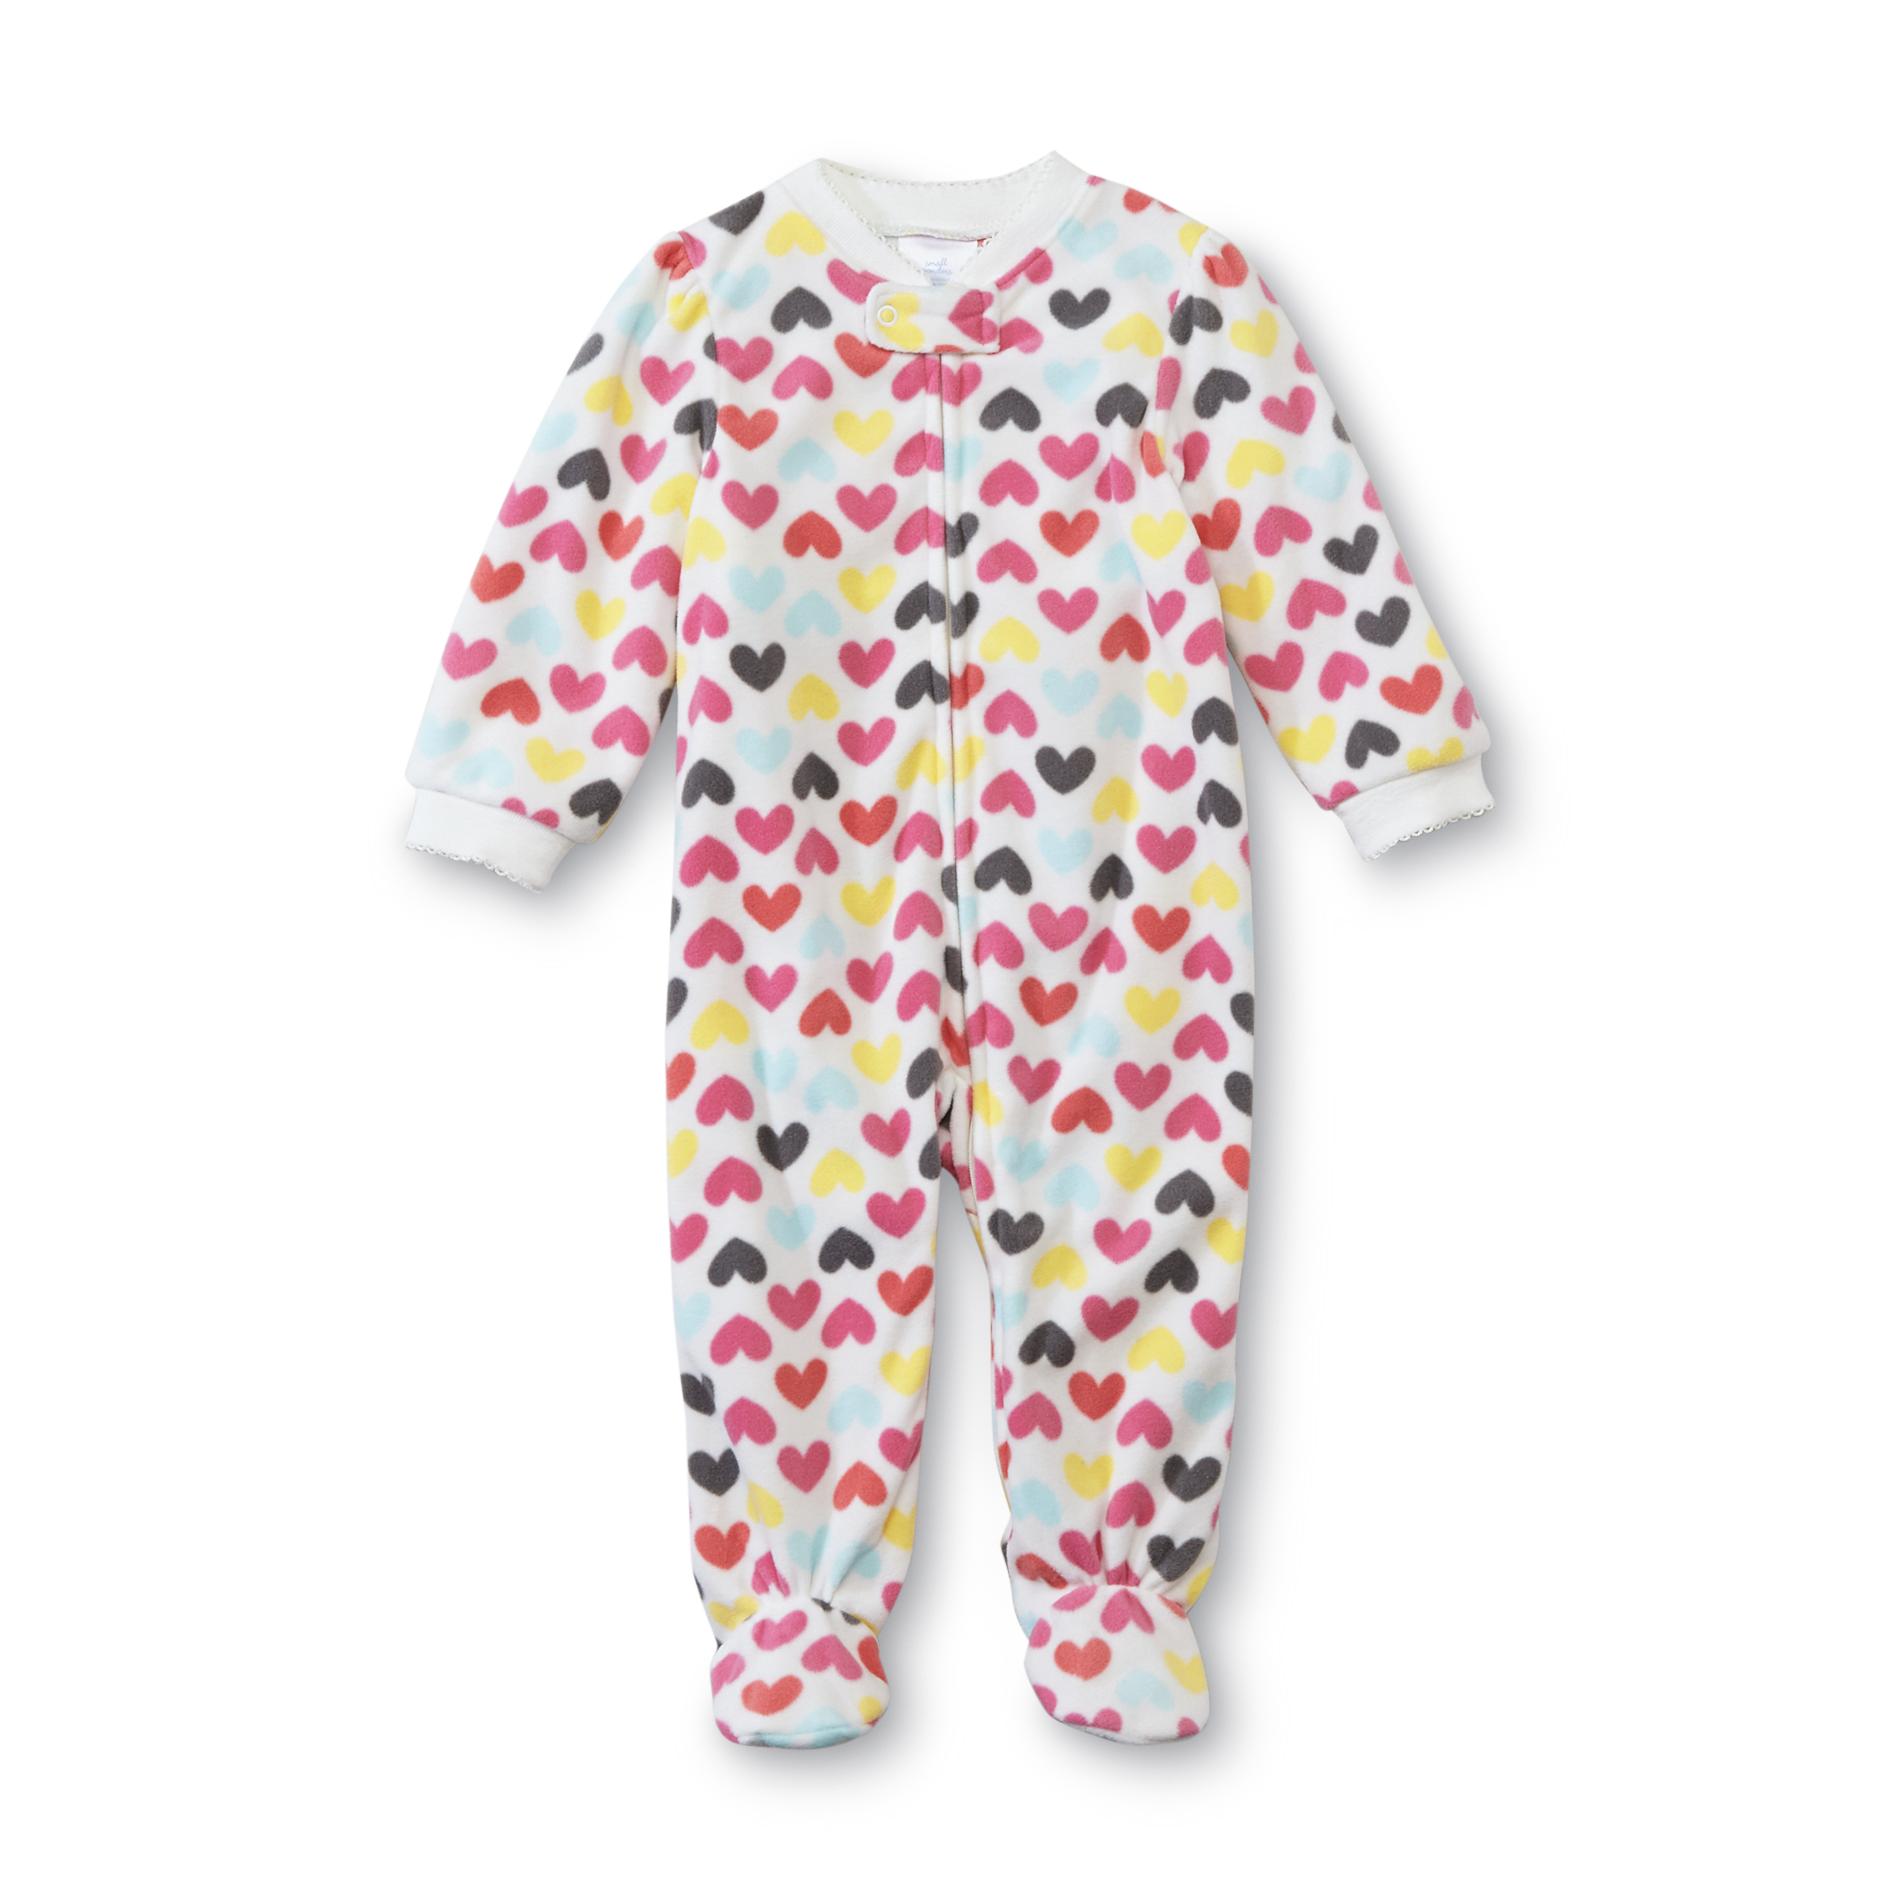 Small Wonders Newborn Girl's Footed Pajamas - Heart Print